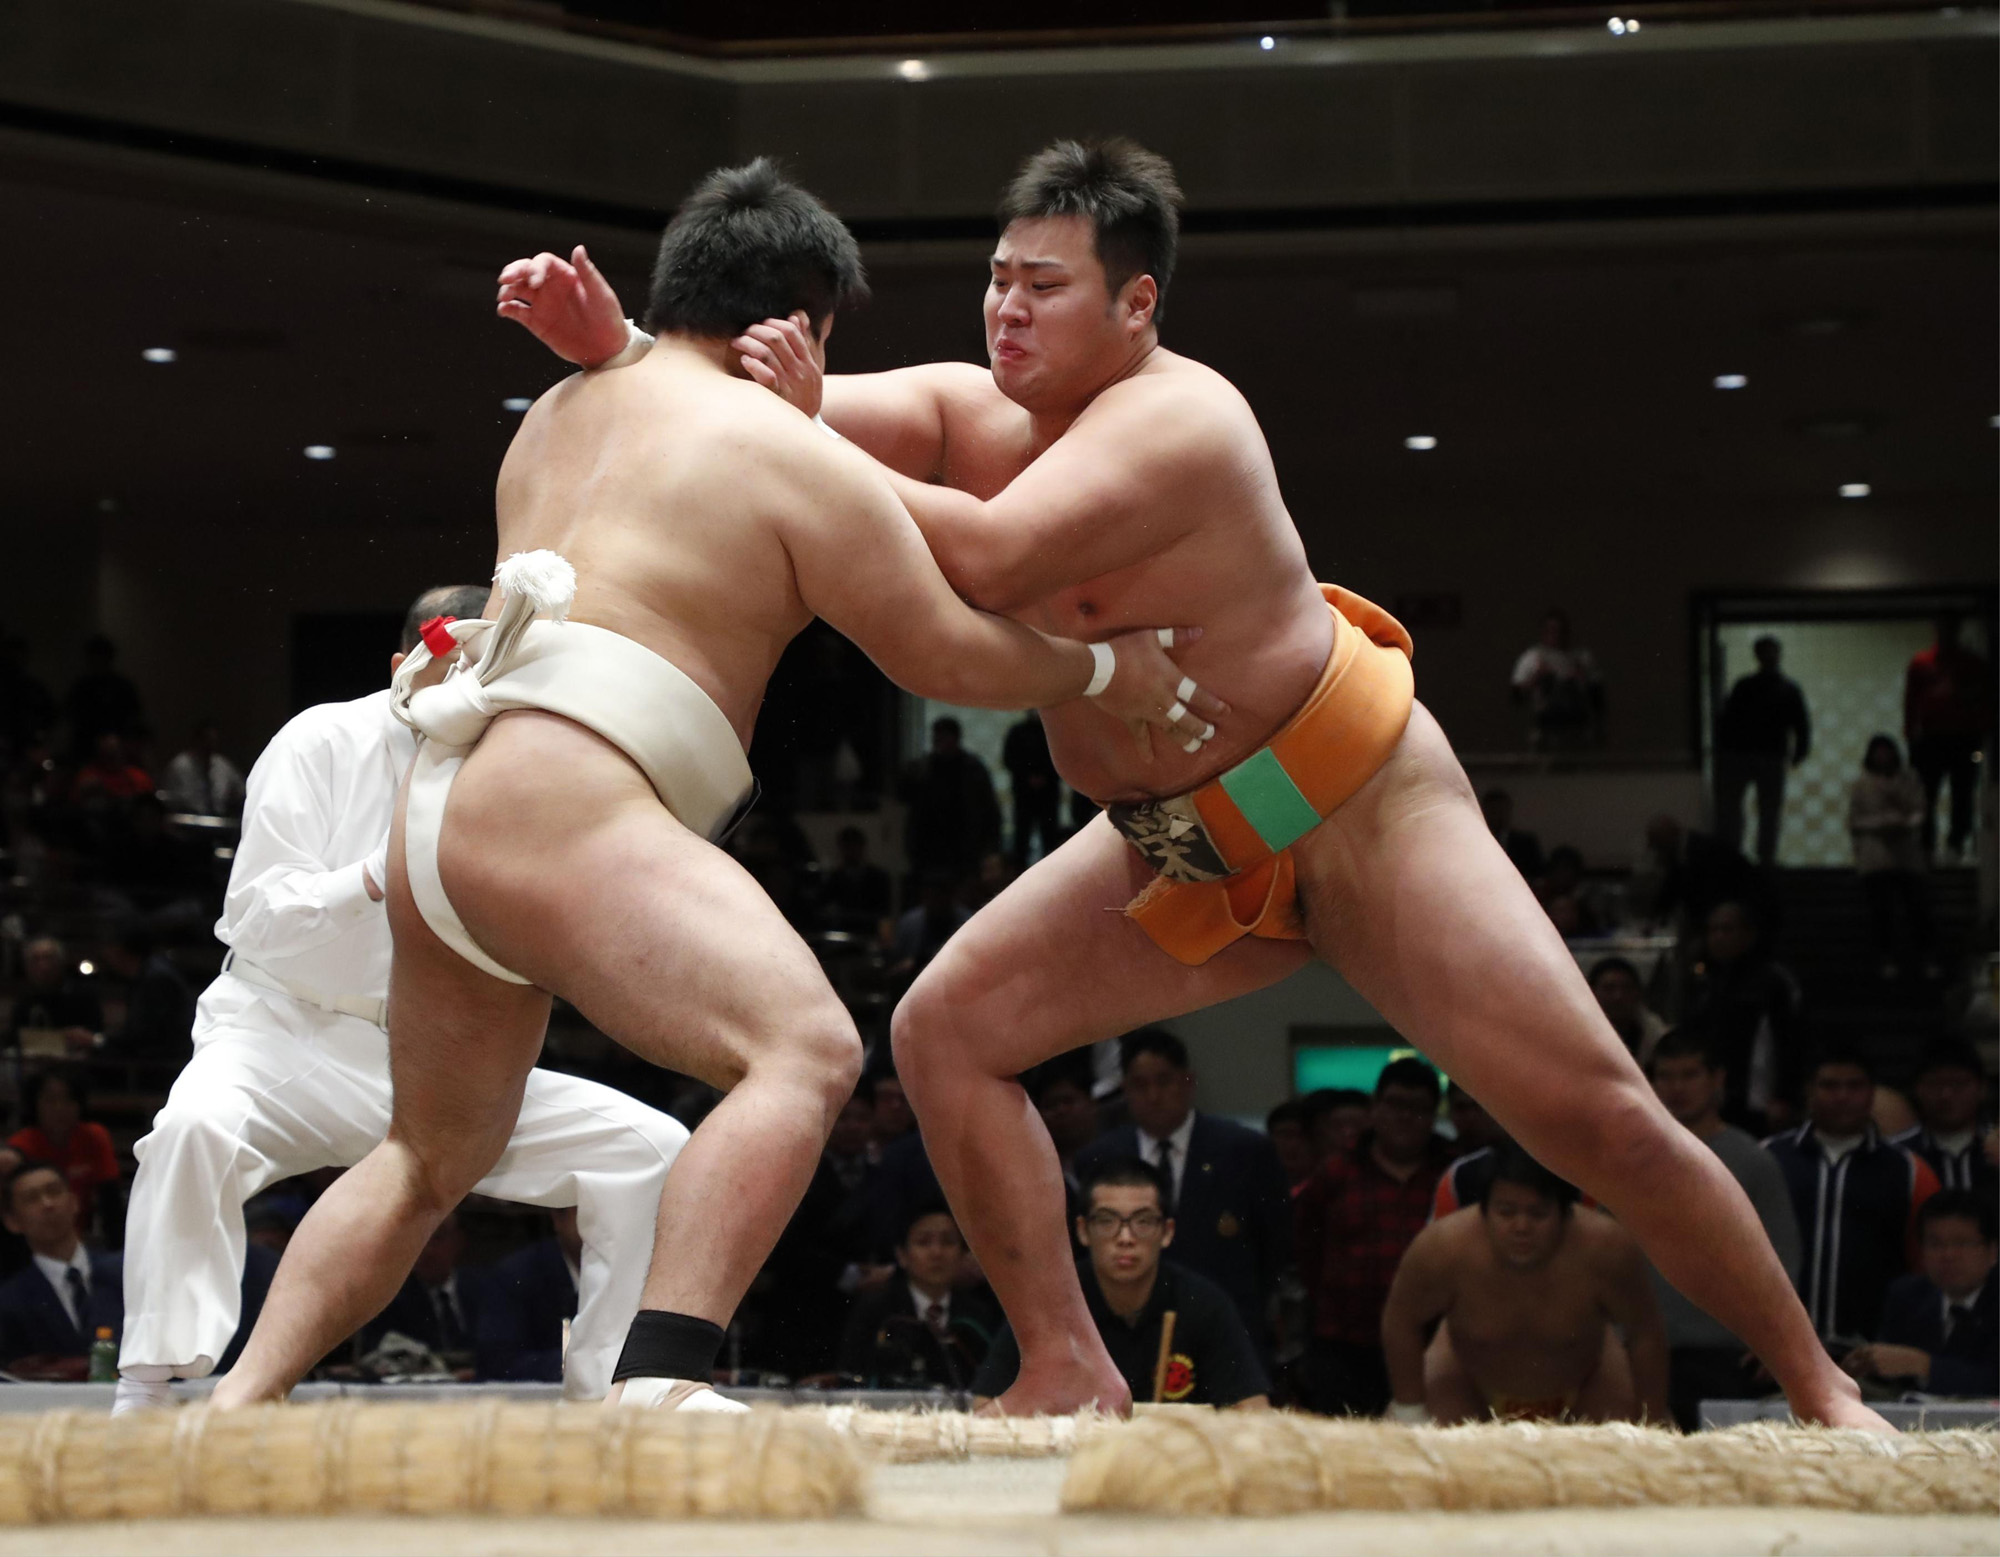 Sumo 101 Amateur sumo